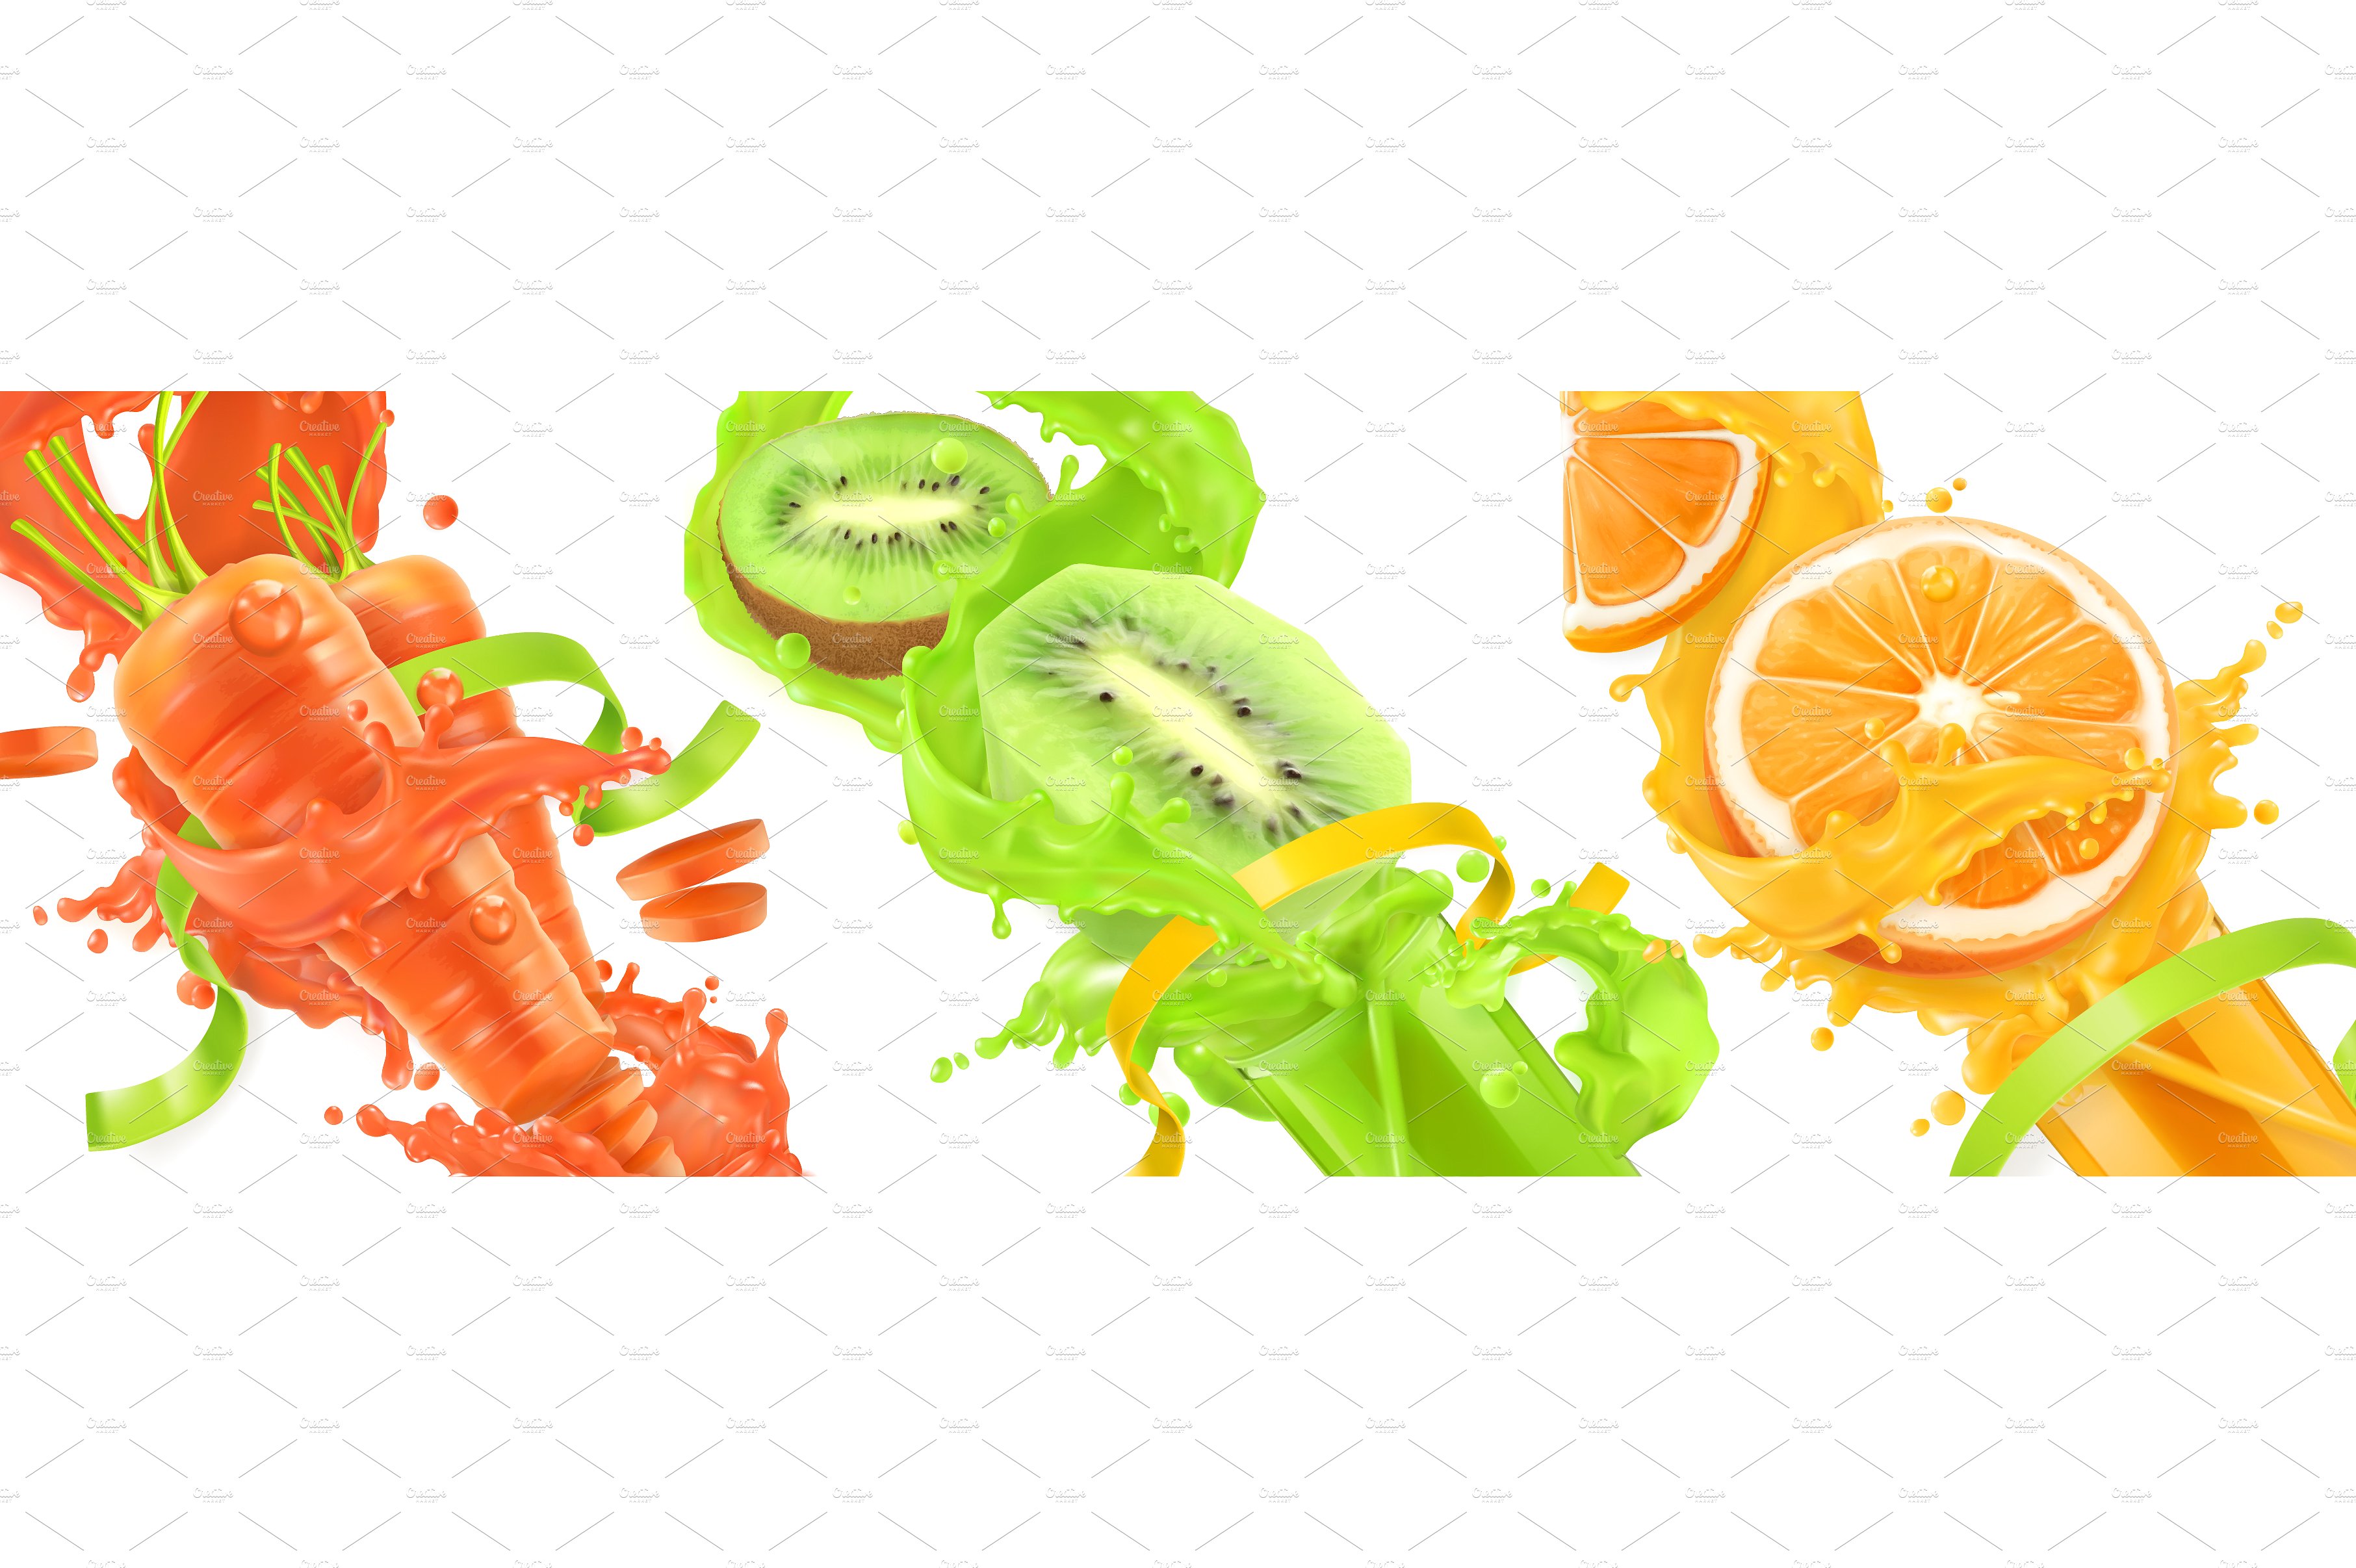 Carrot, kiwi, orange splash of juice ~ Illustrations ~ Creative Market